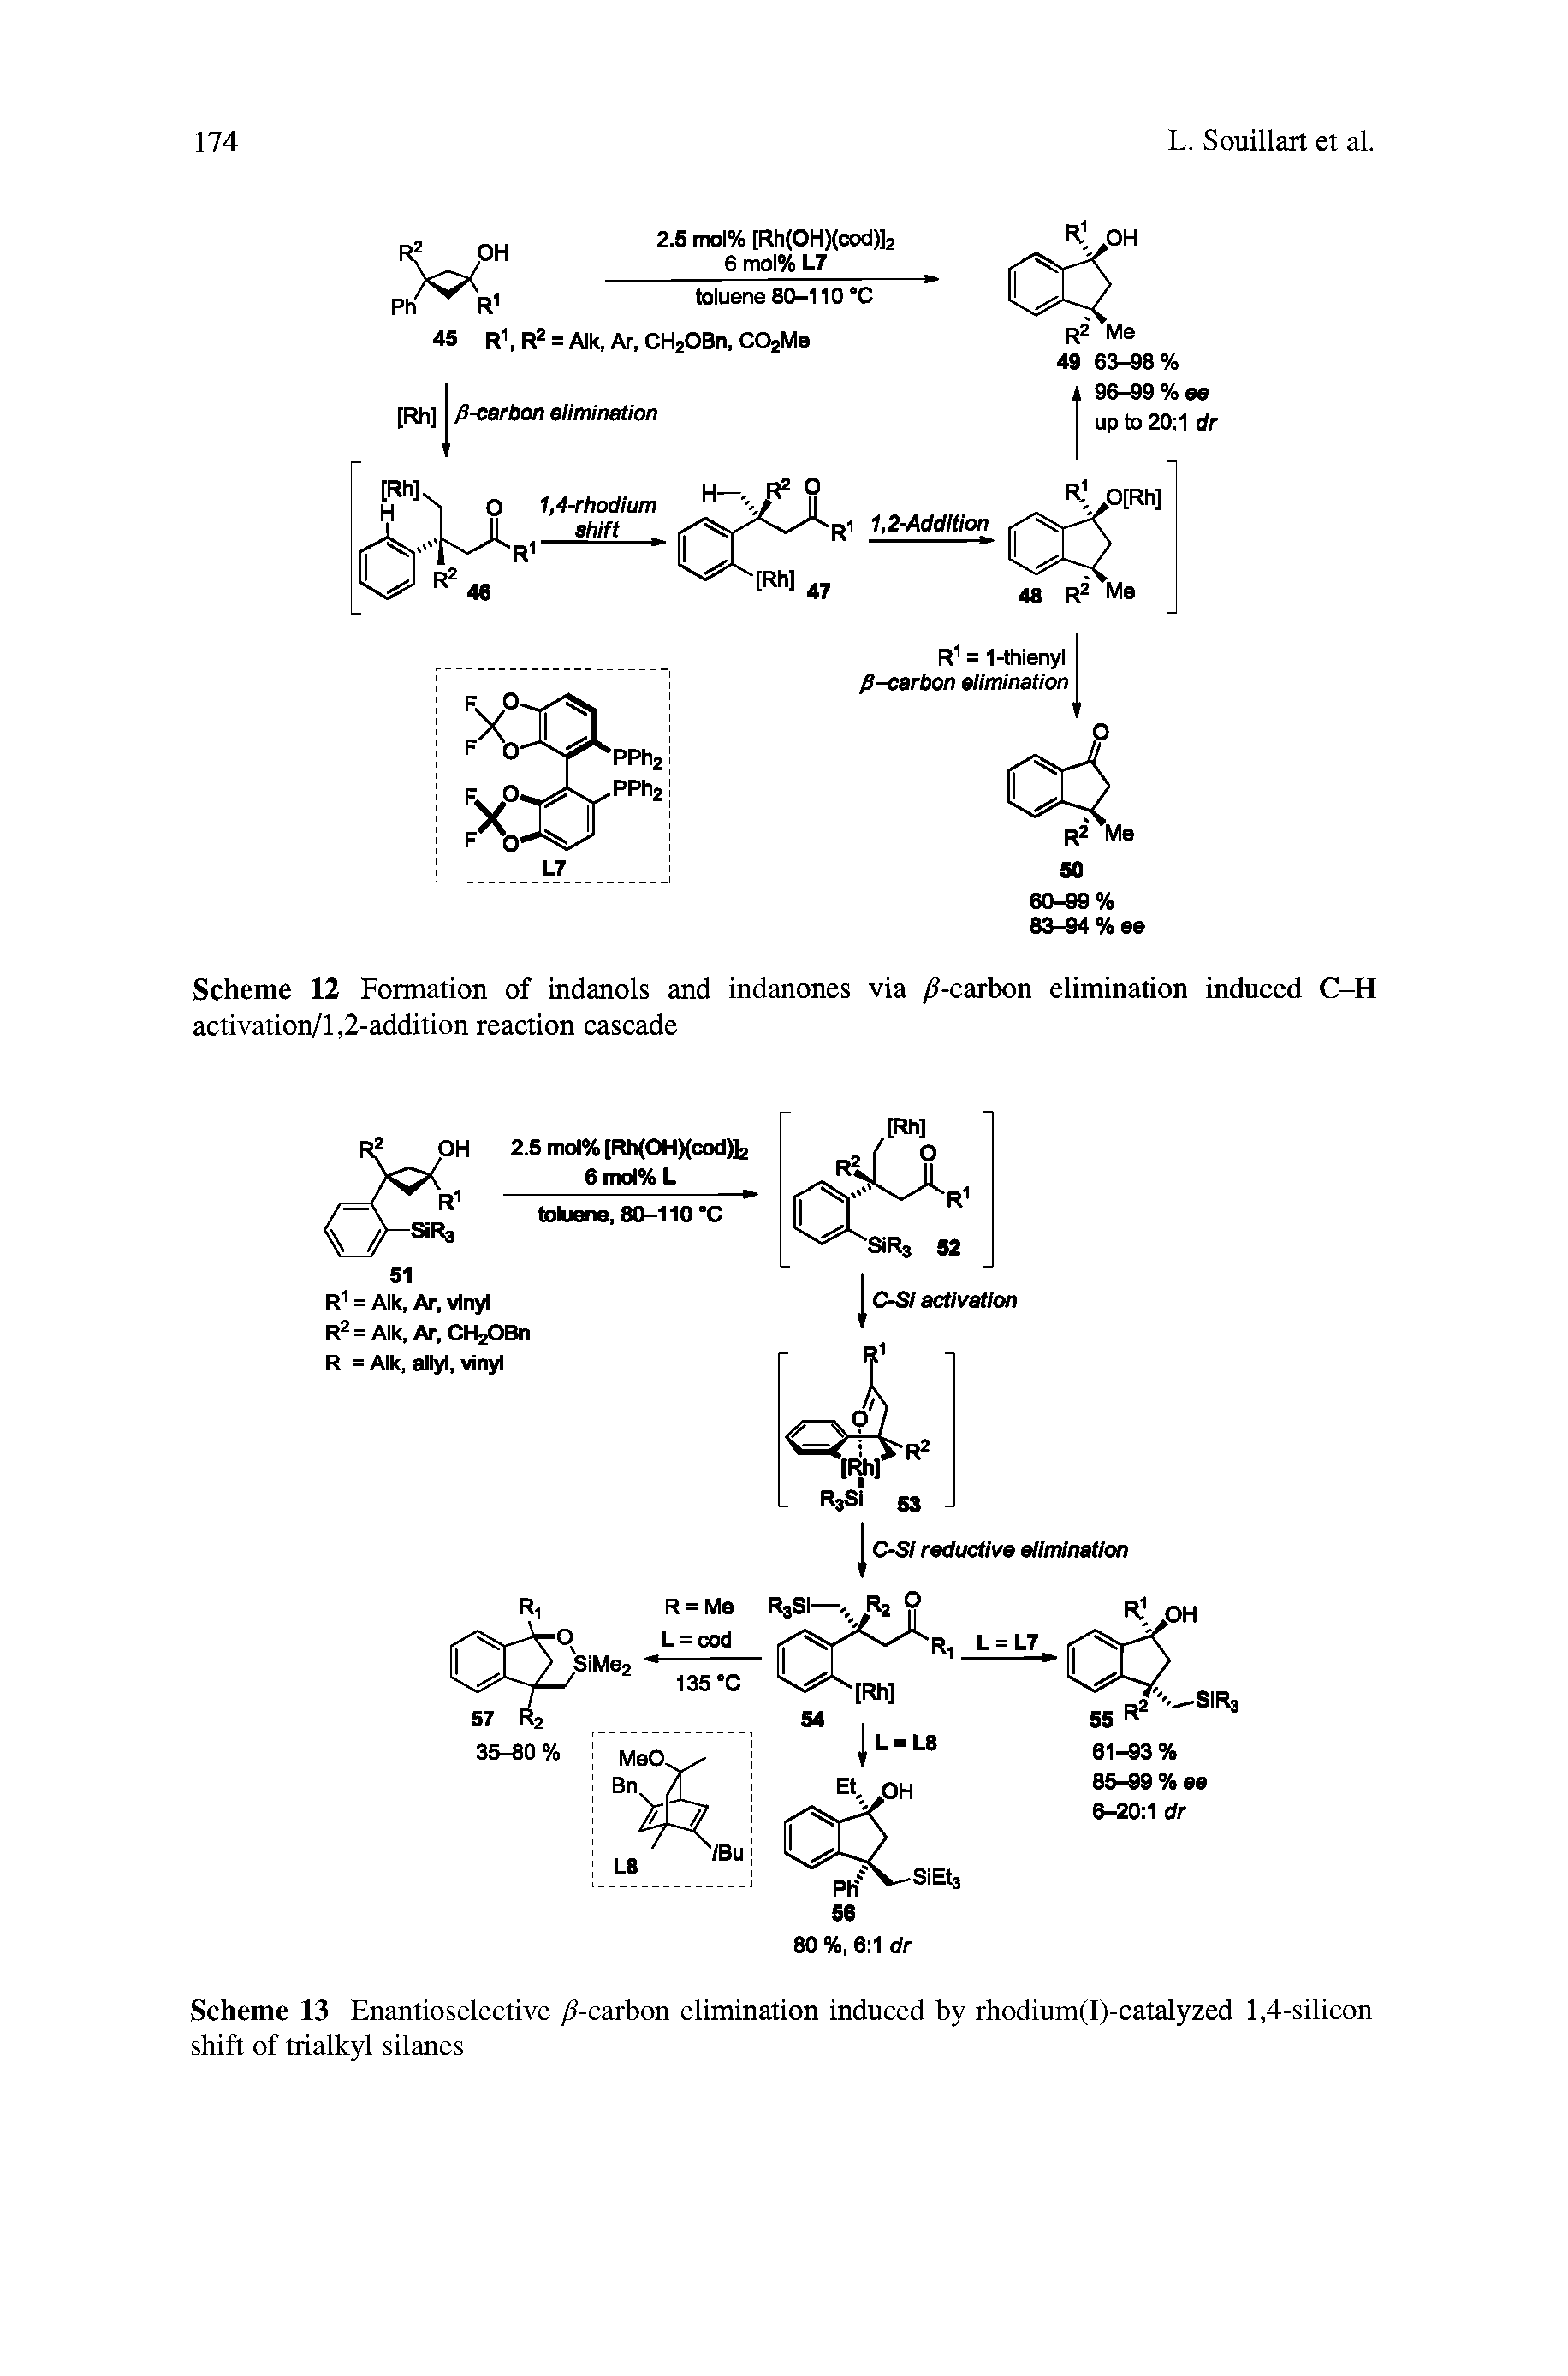 Scheme 12 Foimation of indanols and indanones via -carbon elimination induced C-H activation/1,2-addition reaction cascade...